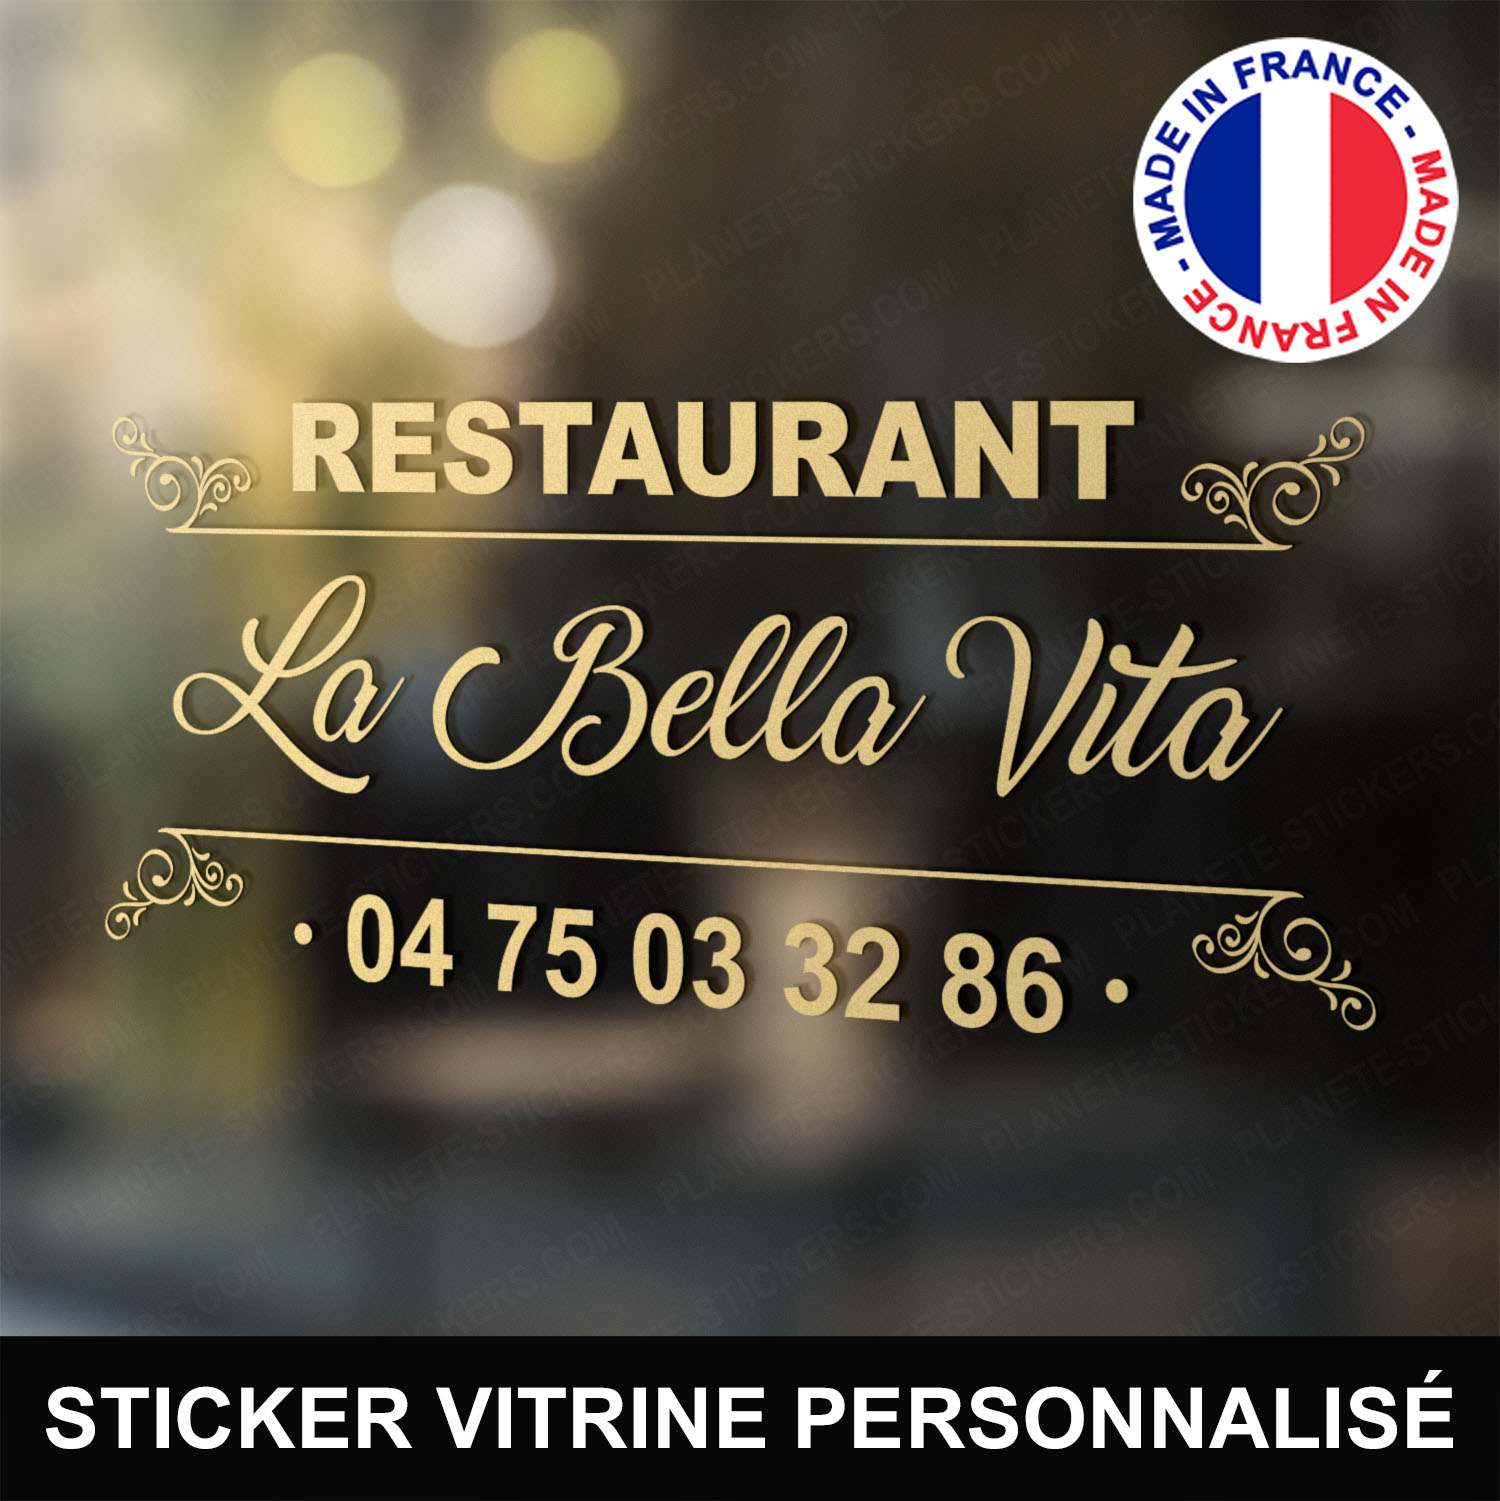 ref22restaurantvitrine-stickers-restaurant-vitrine-restaurant-sticker-personnalisé-autocollant-pro-restaurateur-vitre-resto-professionnel-logo-écriture